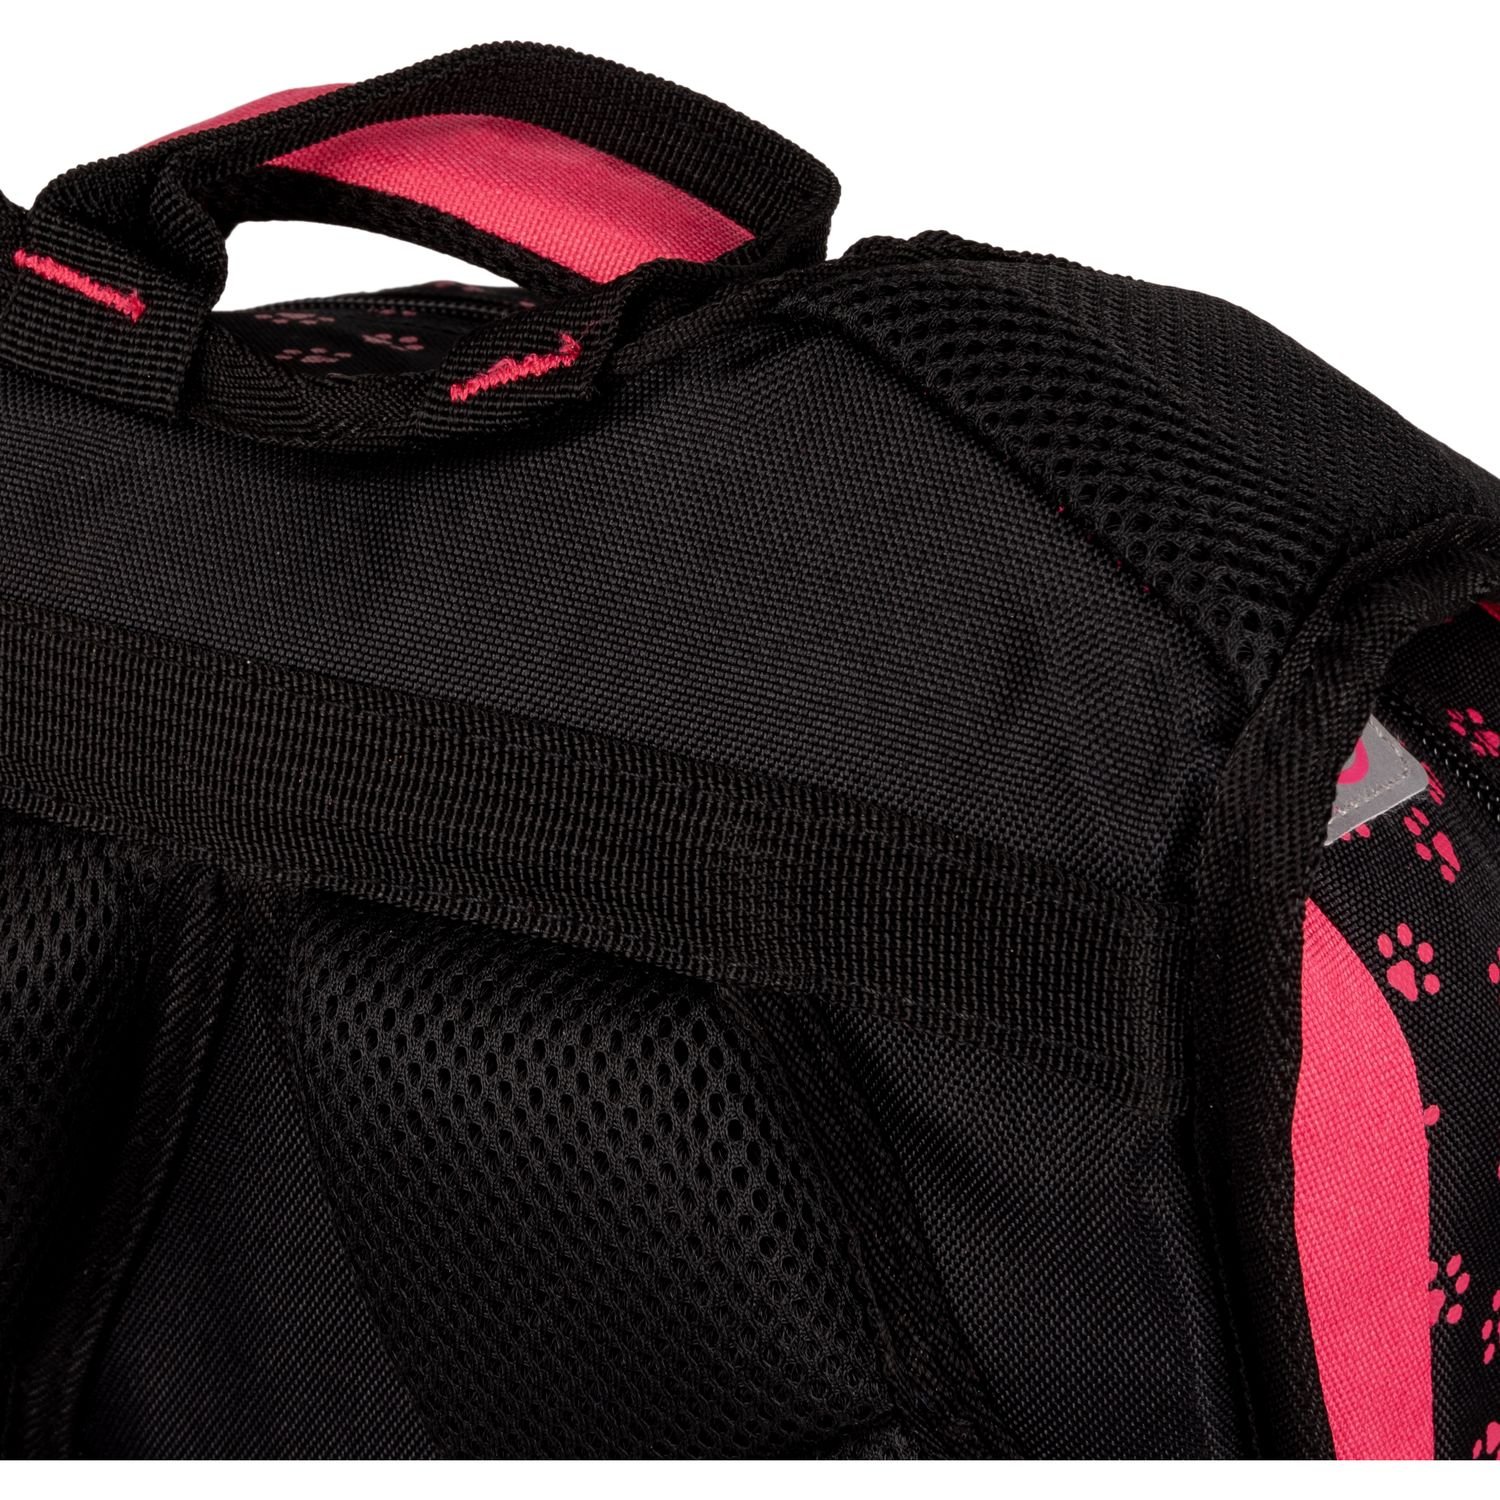 Рюкзак Yes S-58 Meow, черный с розовым. (558004) - фото 6